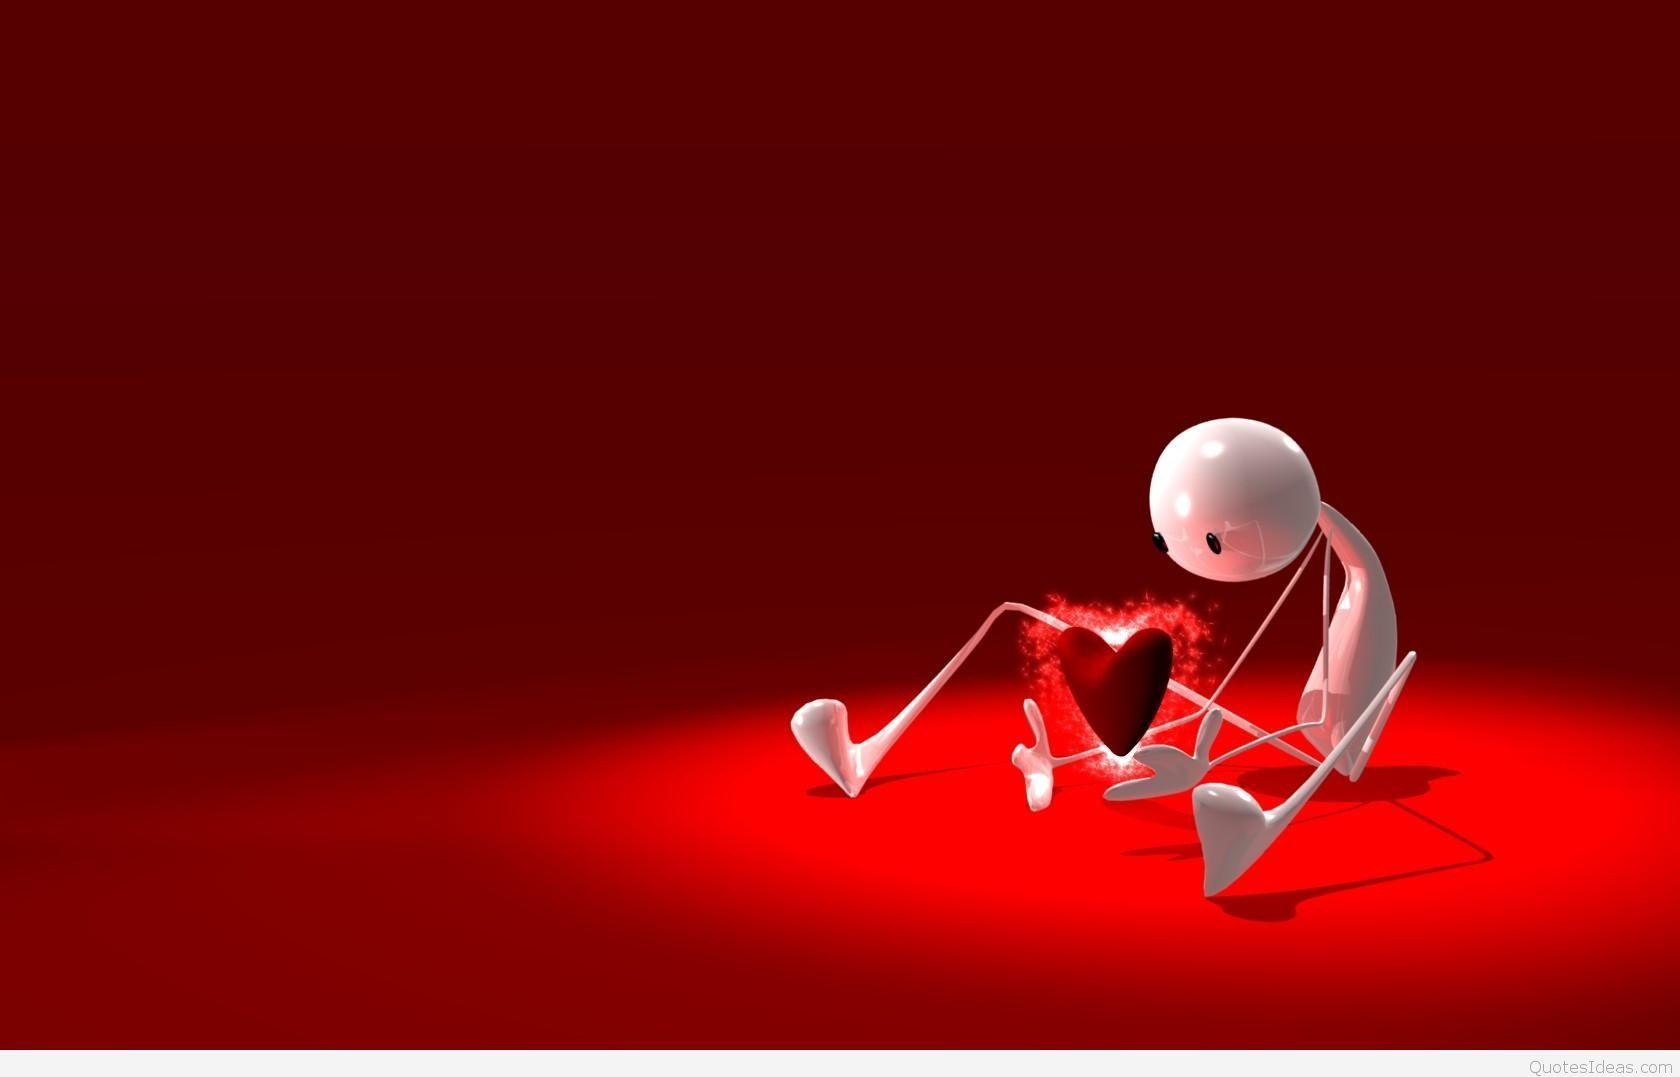 Featured image of post Wallpaper Broken Heart Images Download / Broken heart, red heart digital wallpaper, love, artistic/3d.